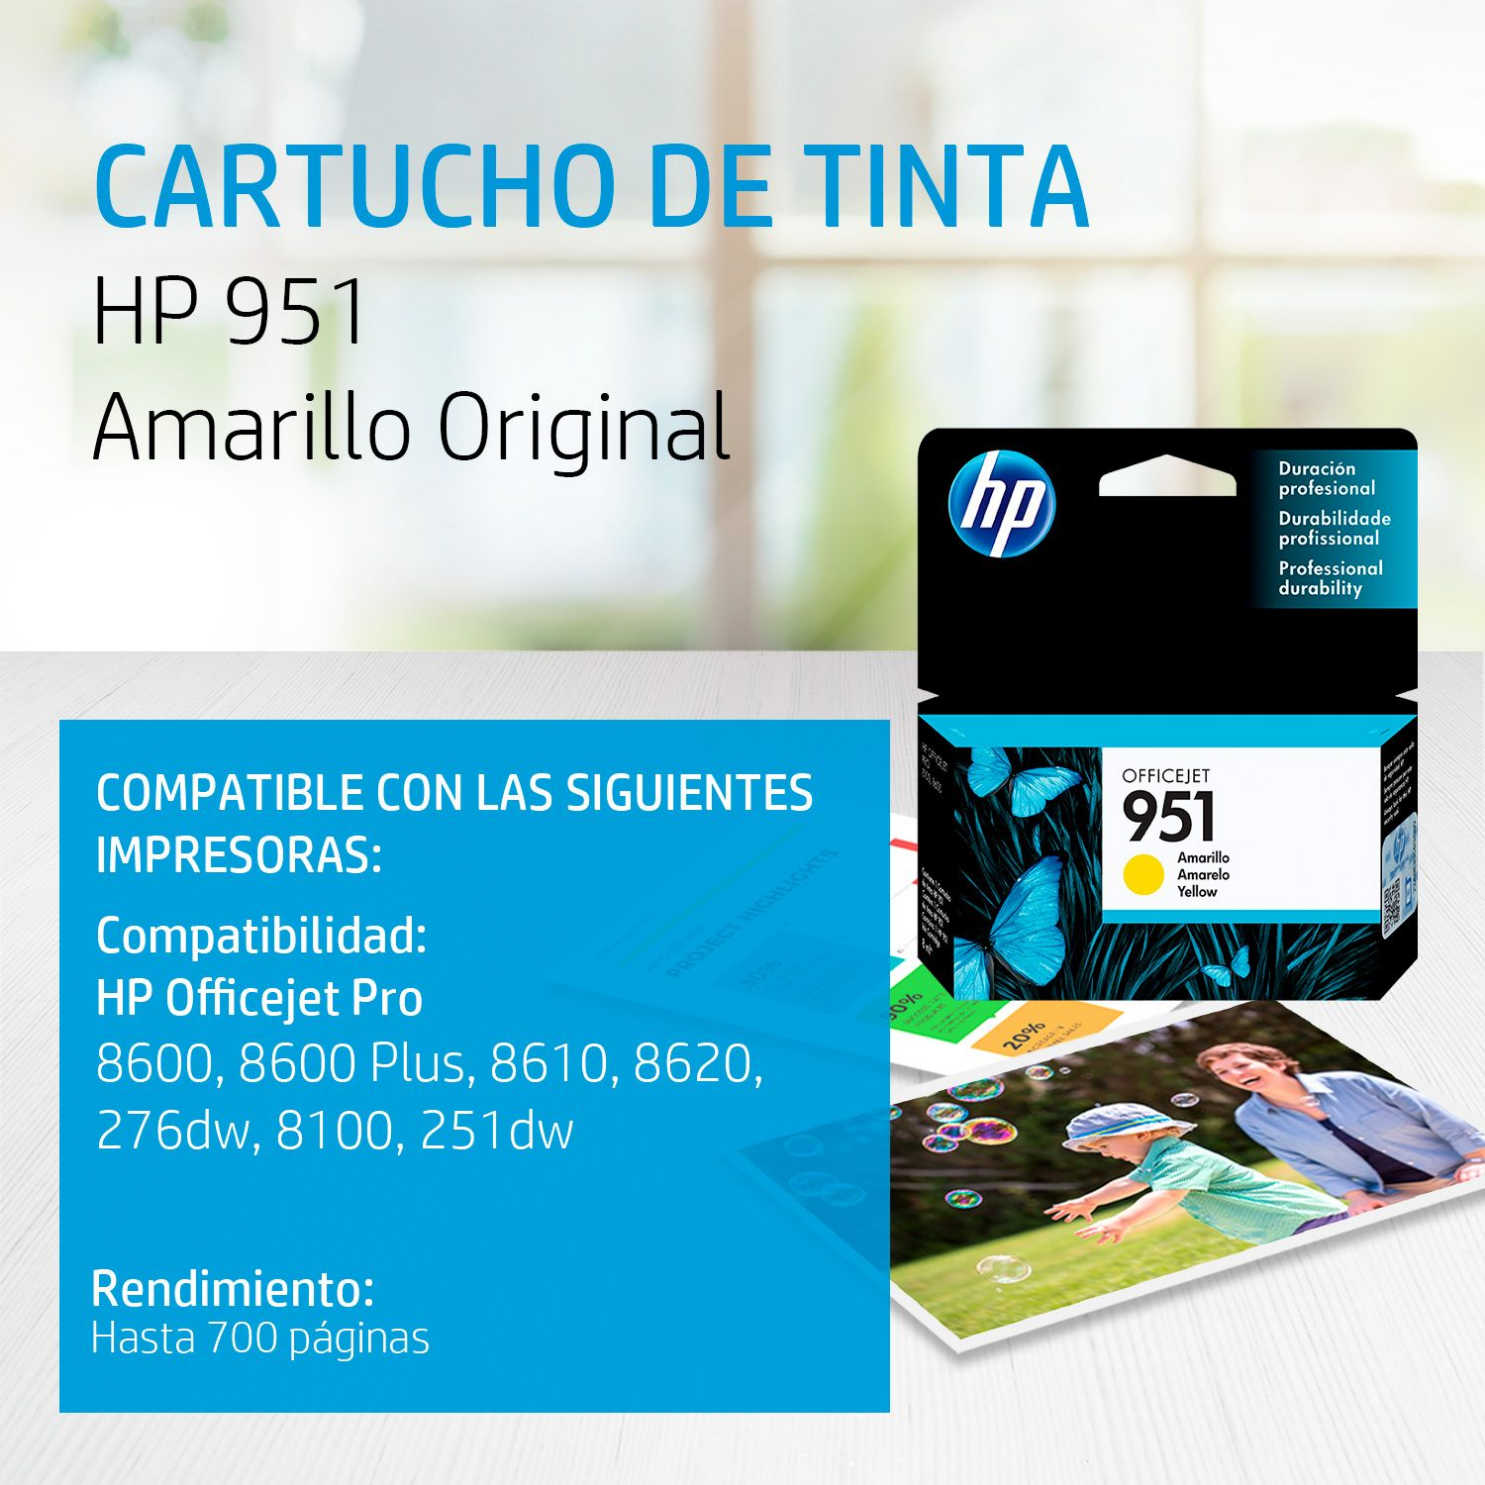 Cartucho de tinta HP 951 Yellow (CN052AL) OfficeJet 8100, 8600, 700 Pag.